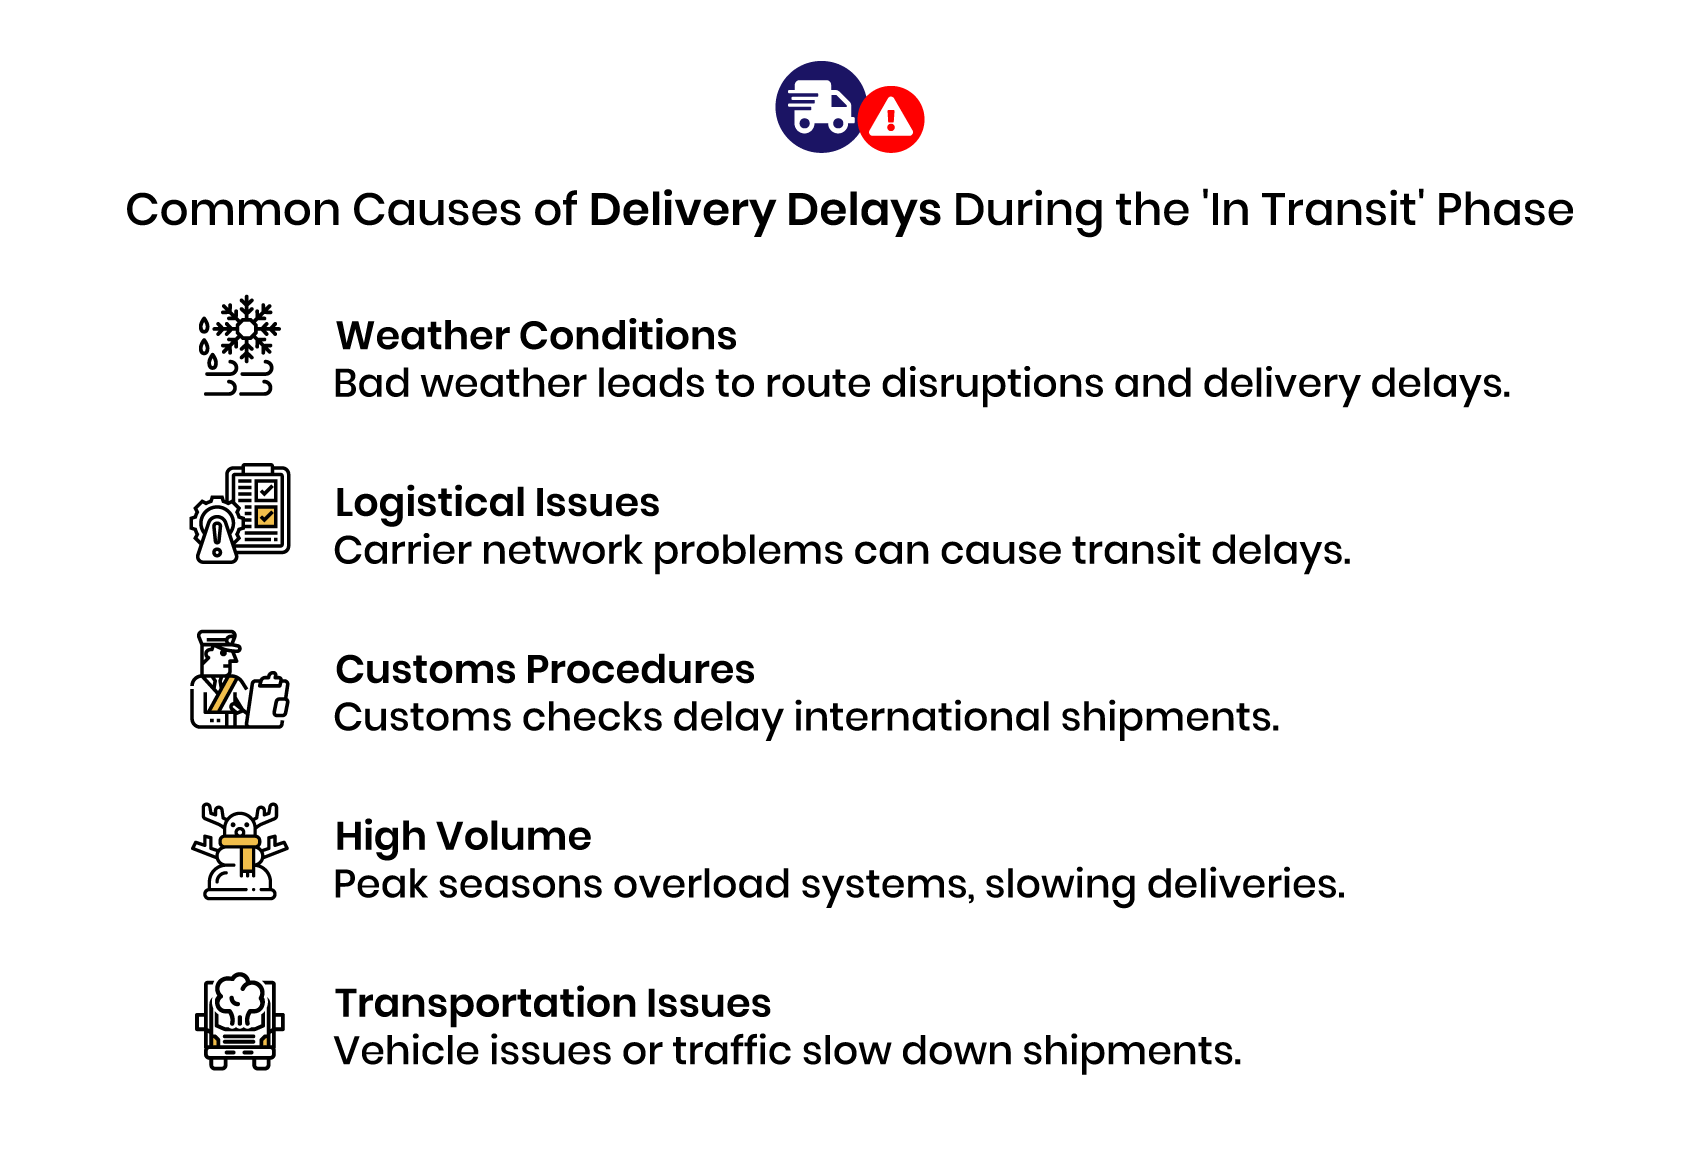 Delays during in-transit